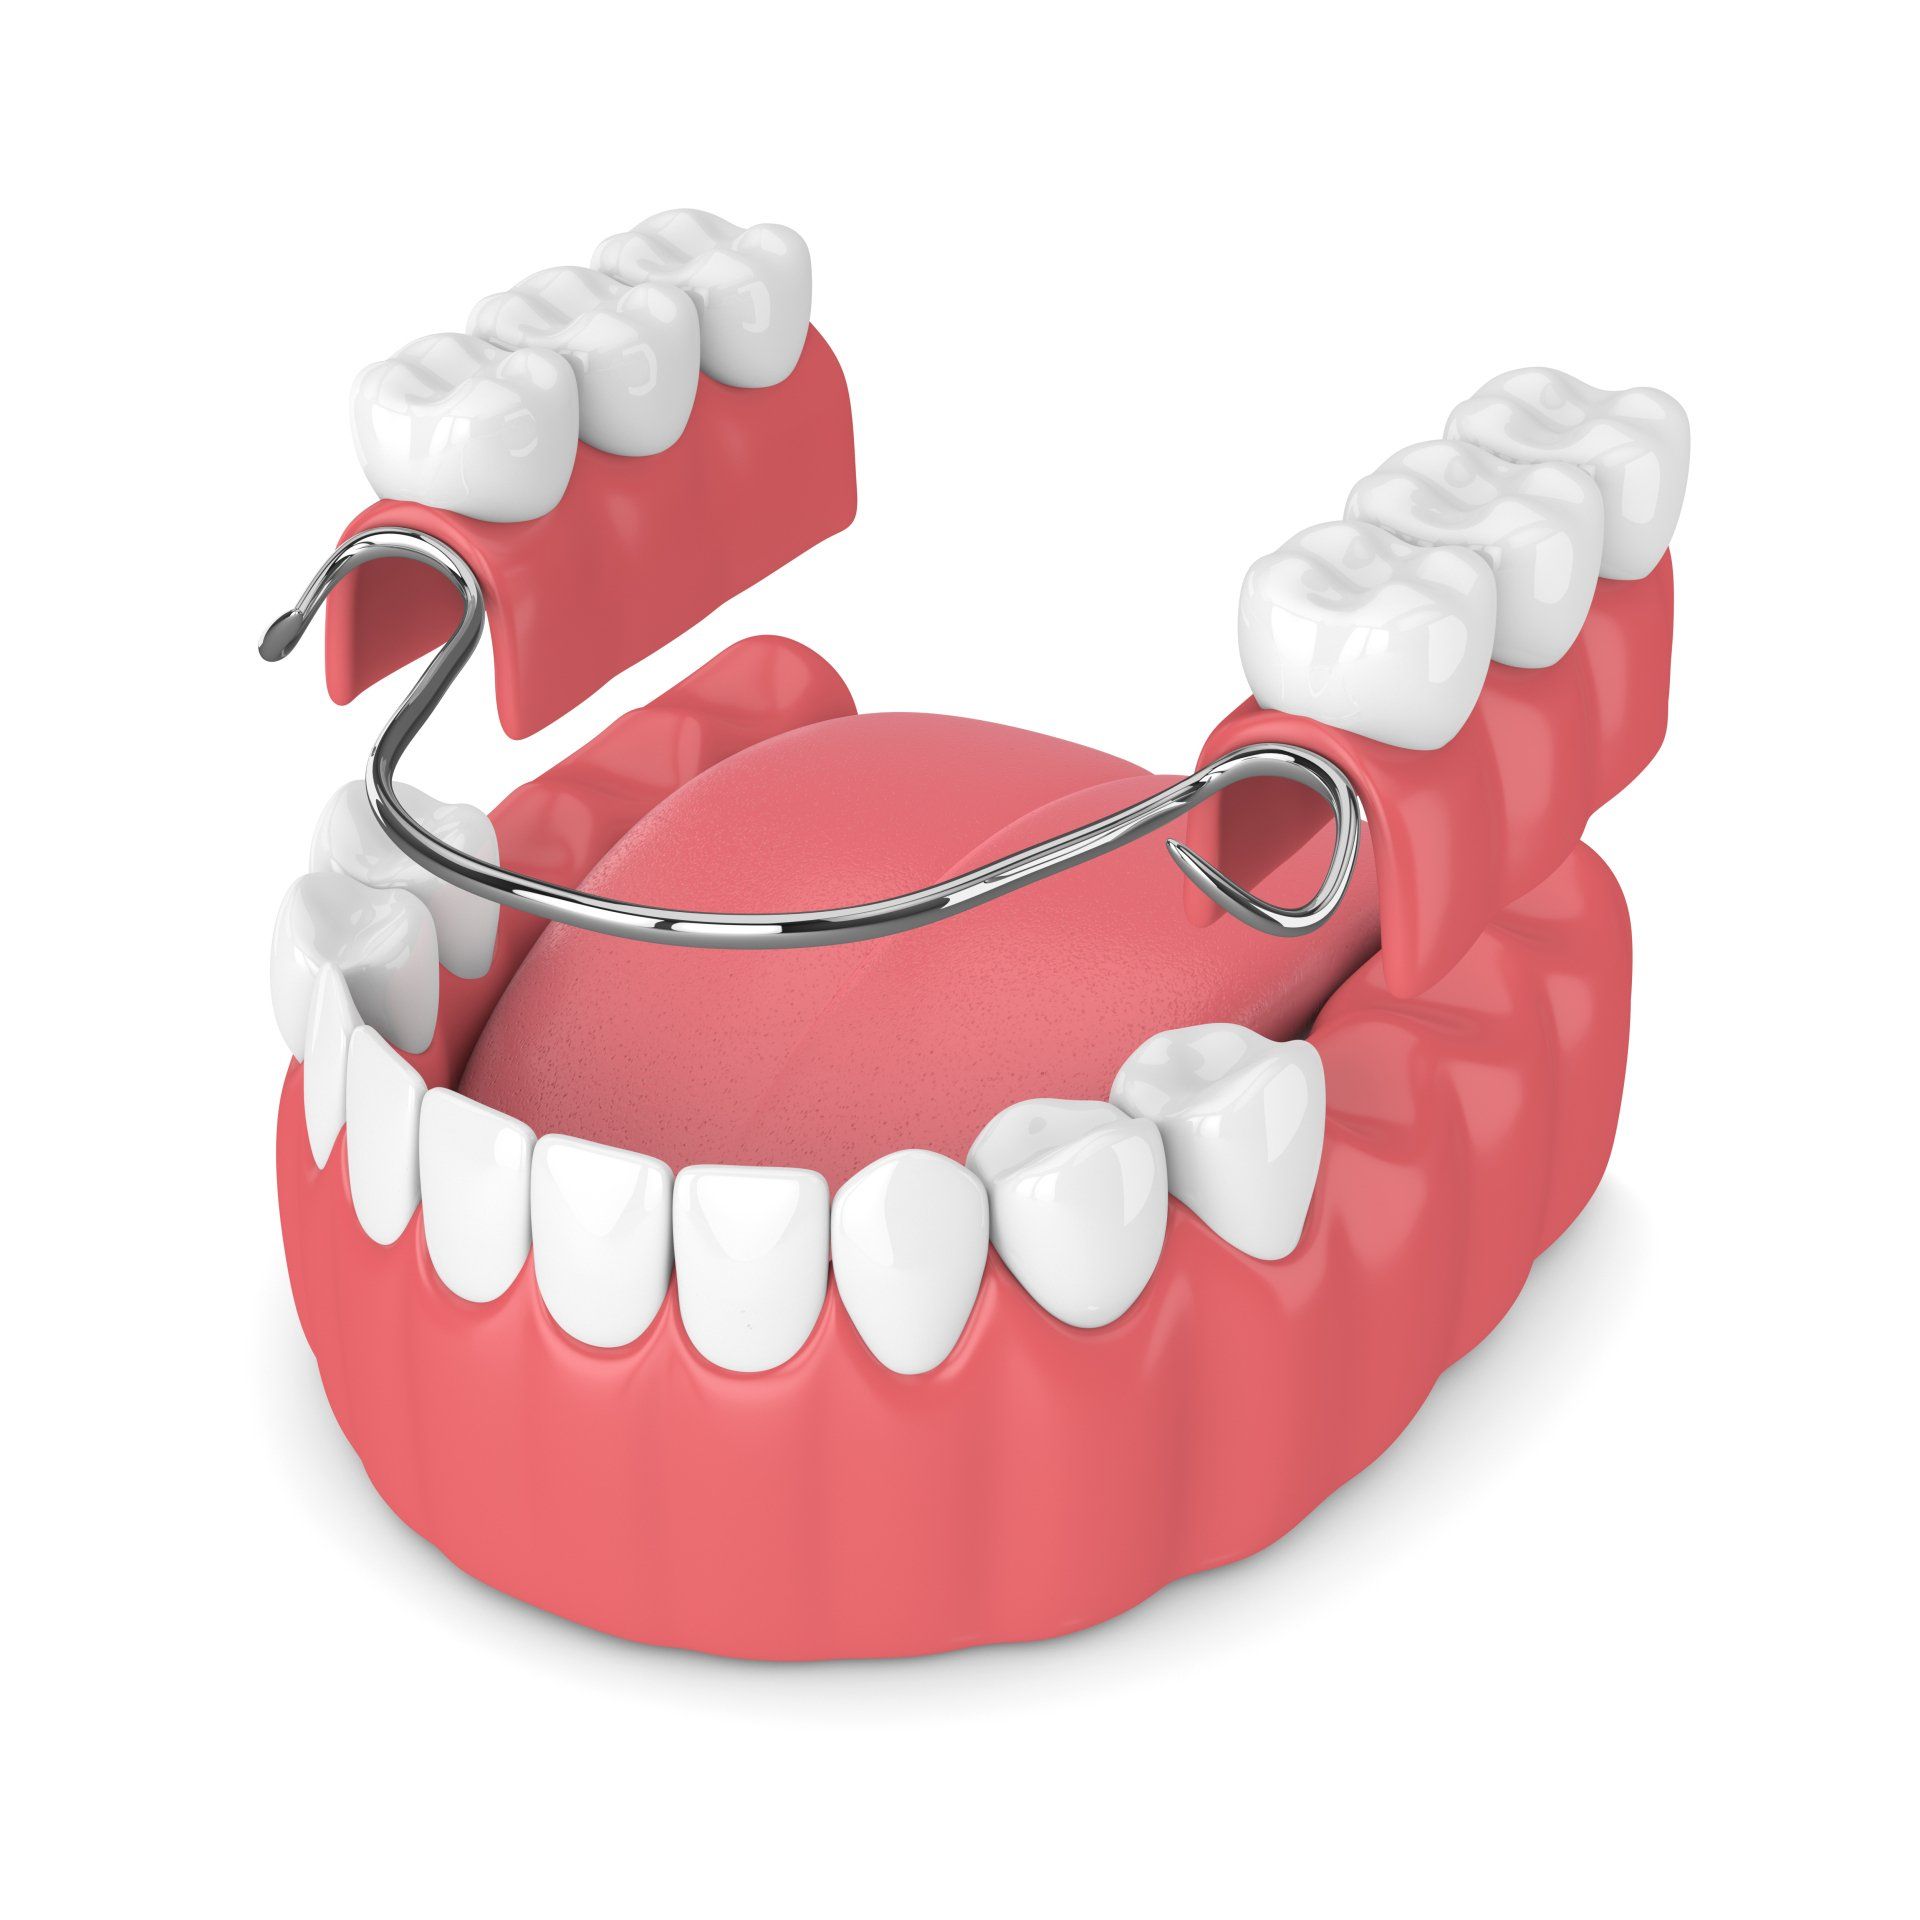 model of partial dentures